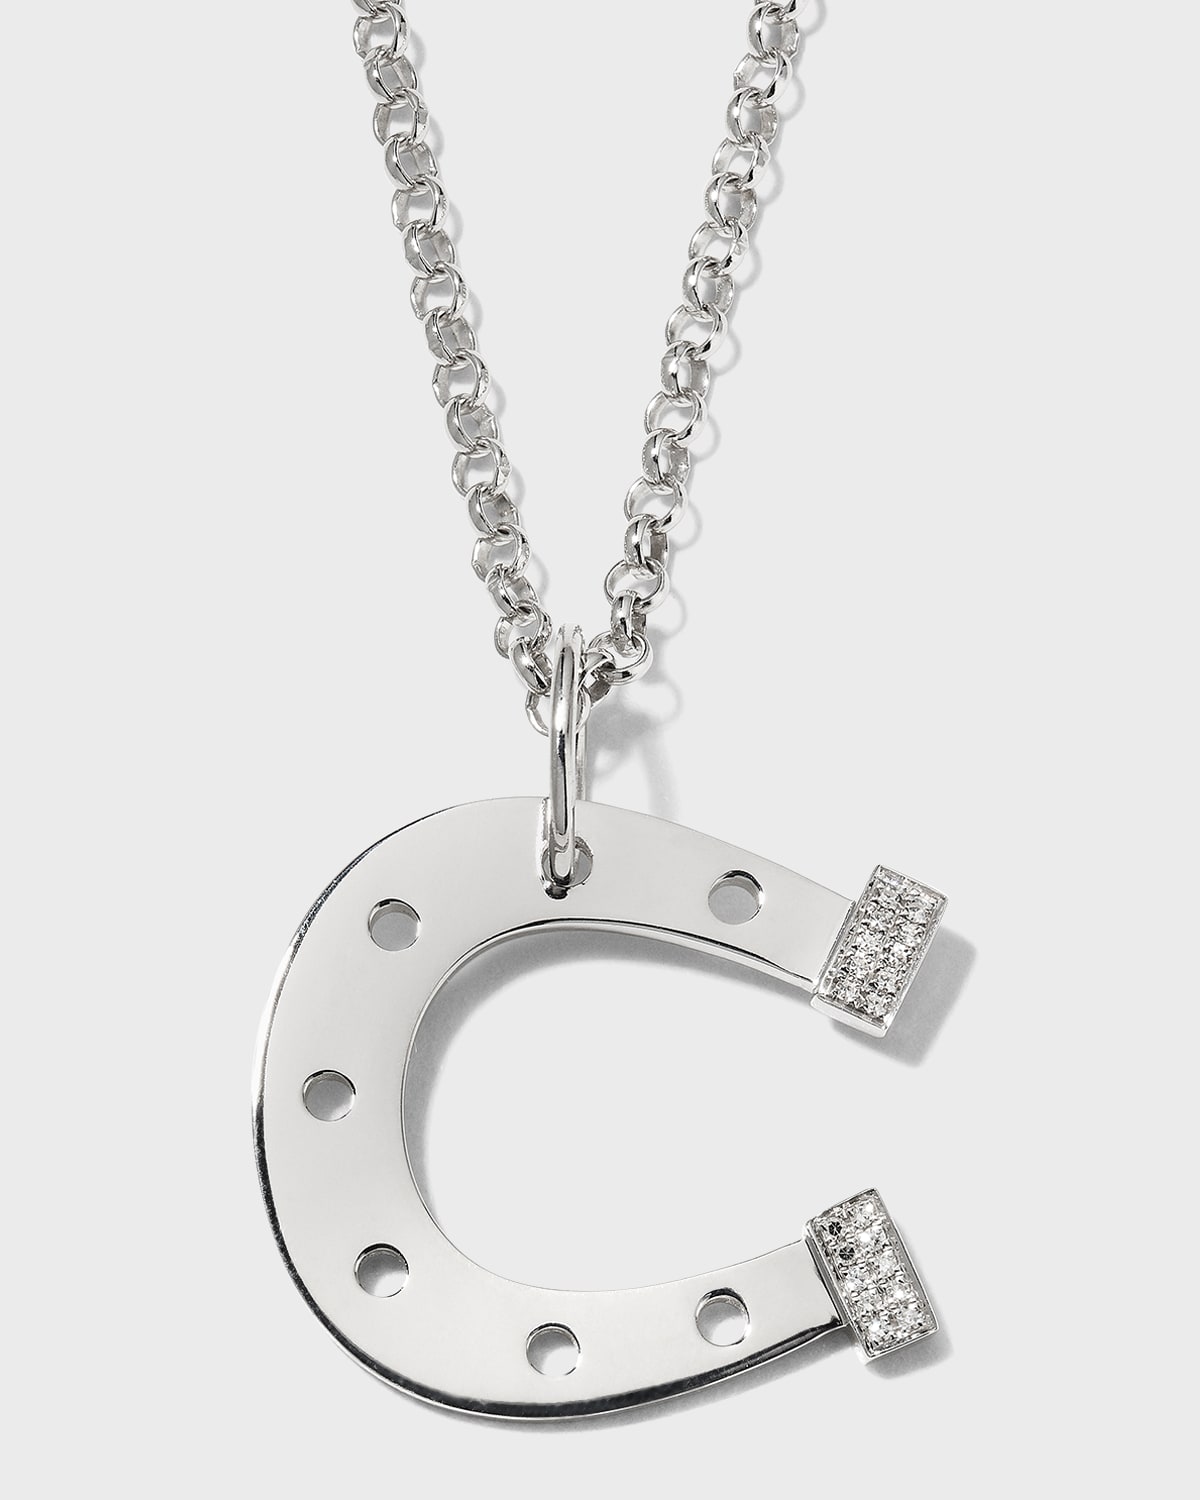 Bridget King Jewelry Silver Horseshoe Necklace